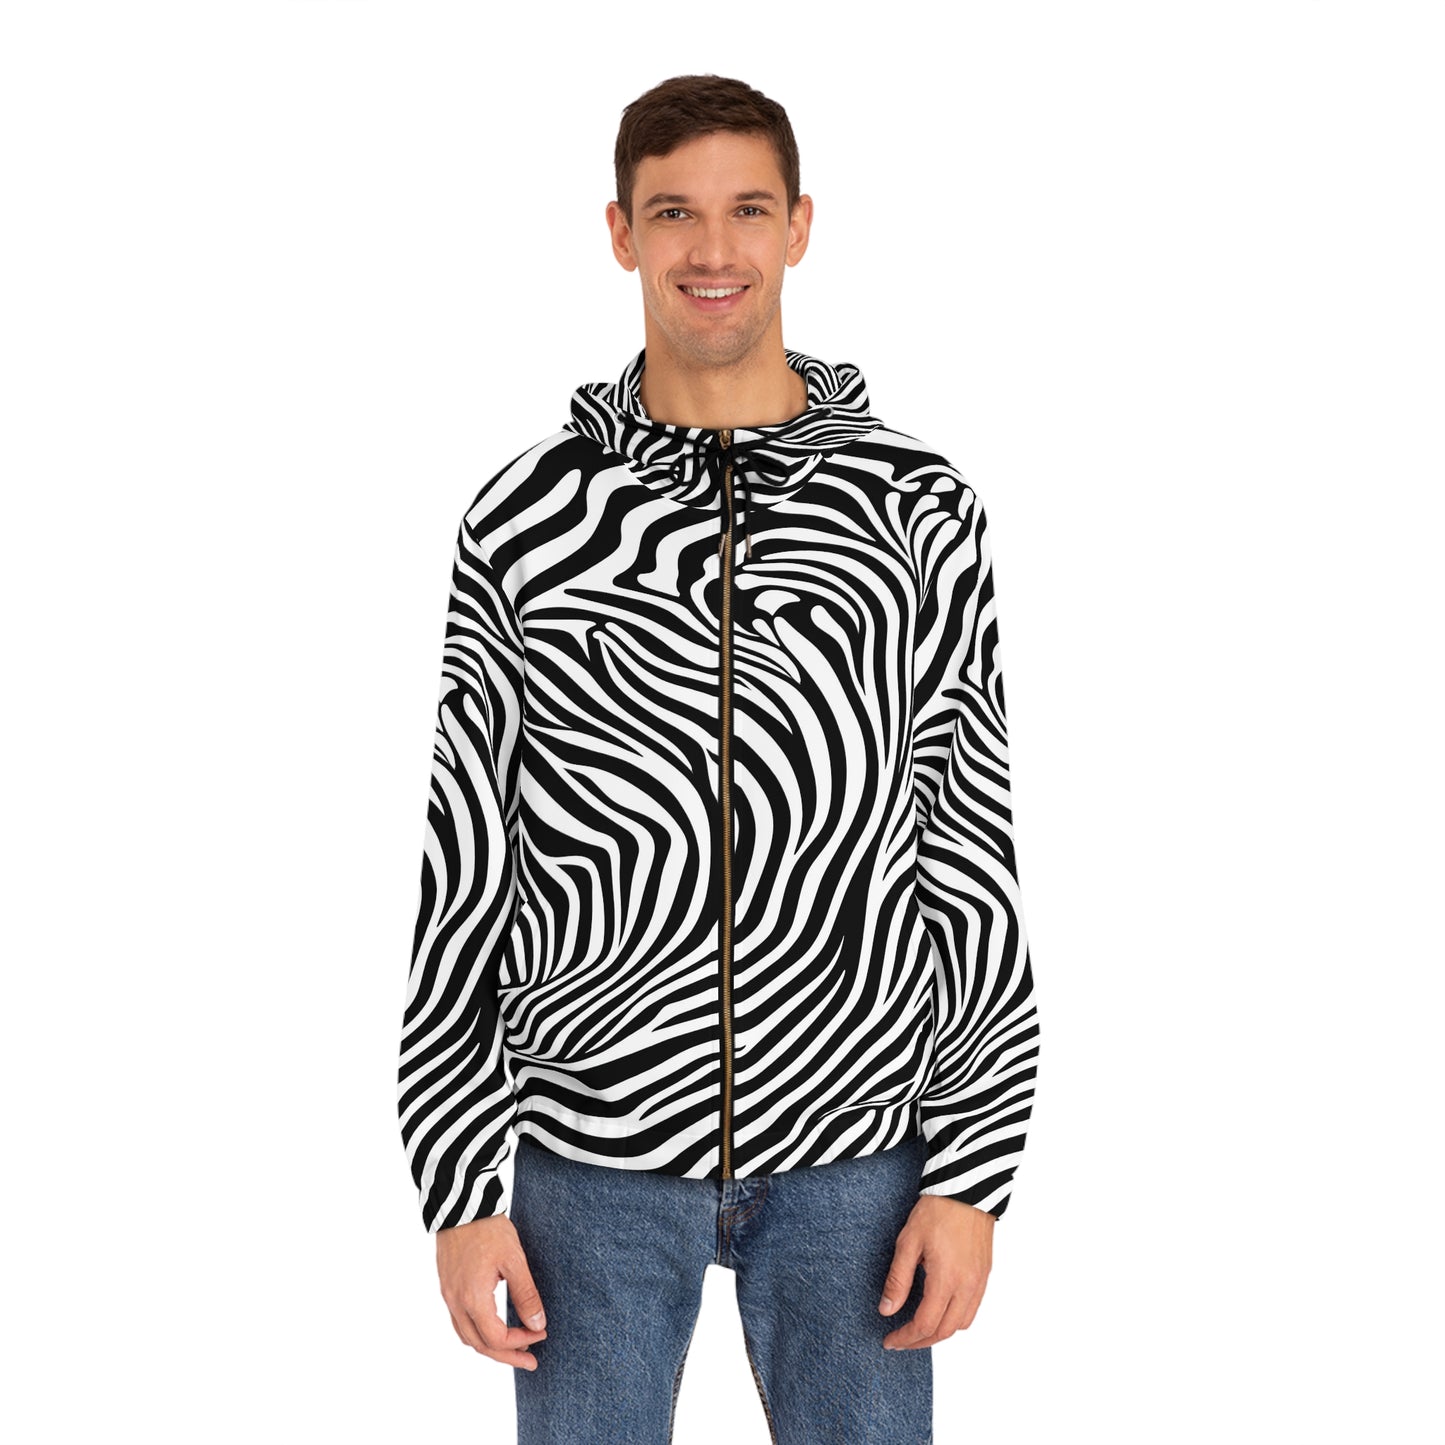 Abstract Zebra Pattern